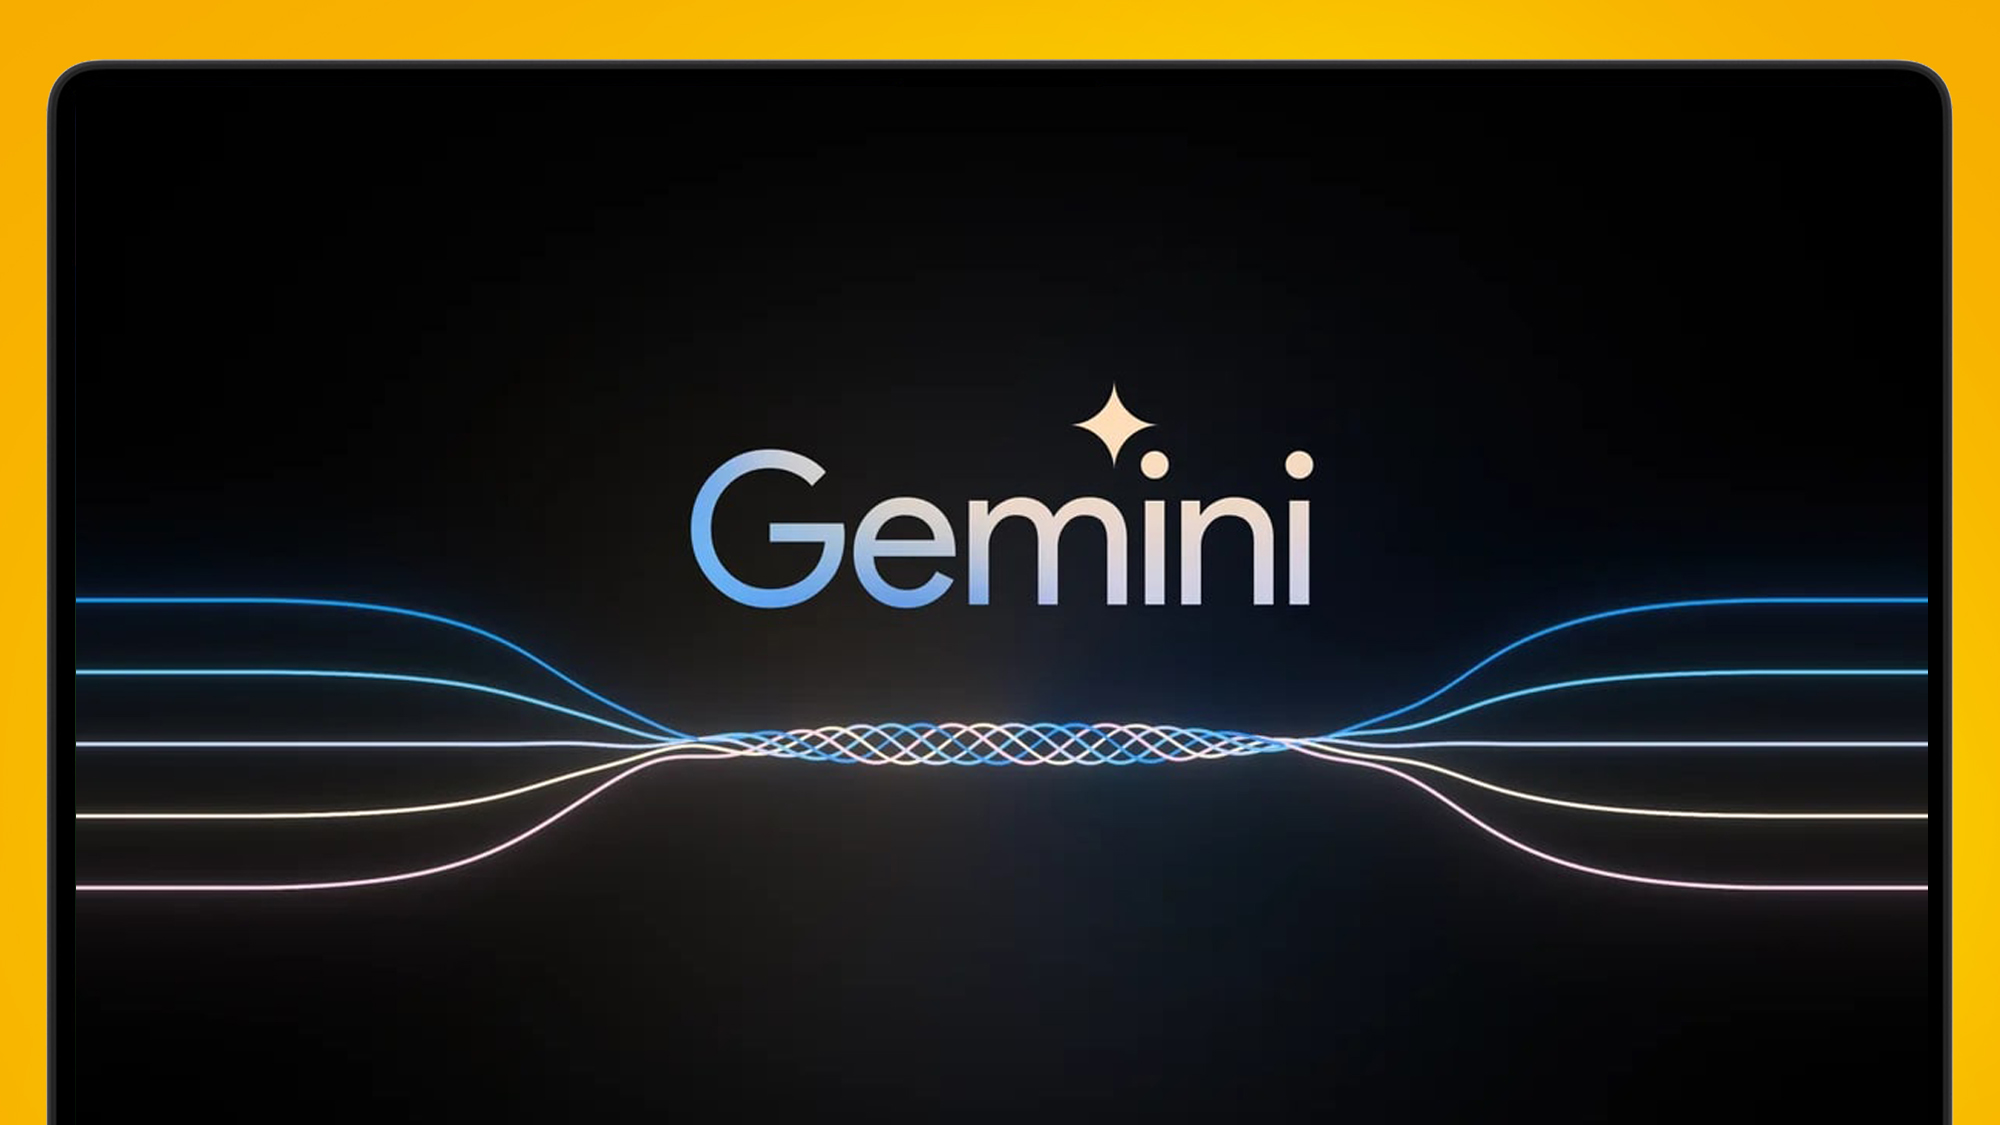 Логотип Google Gemini на экране ноутбука на оранжевом фоне